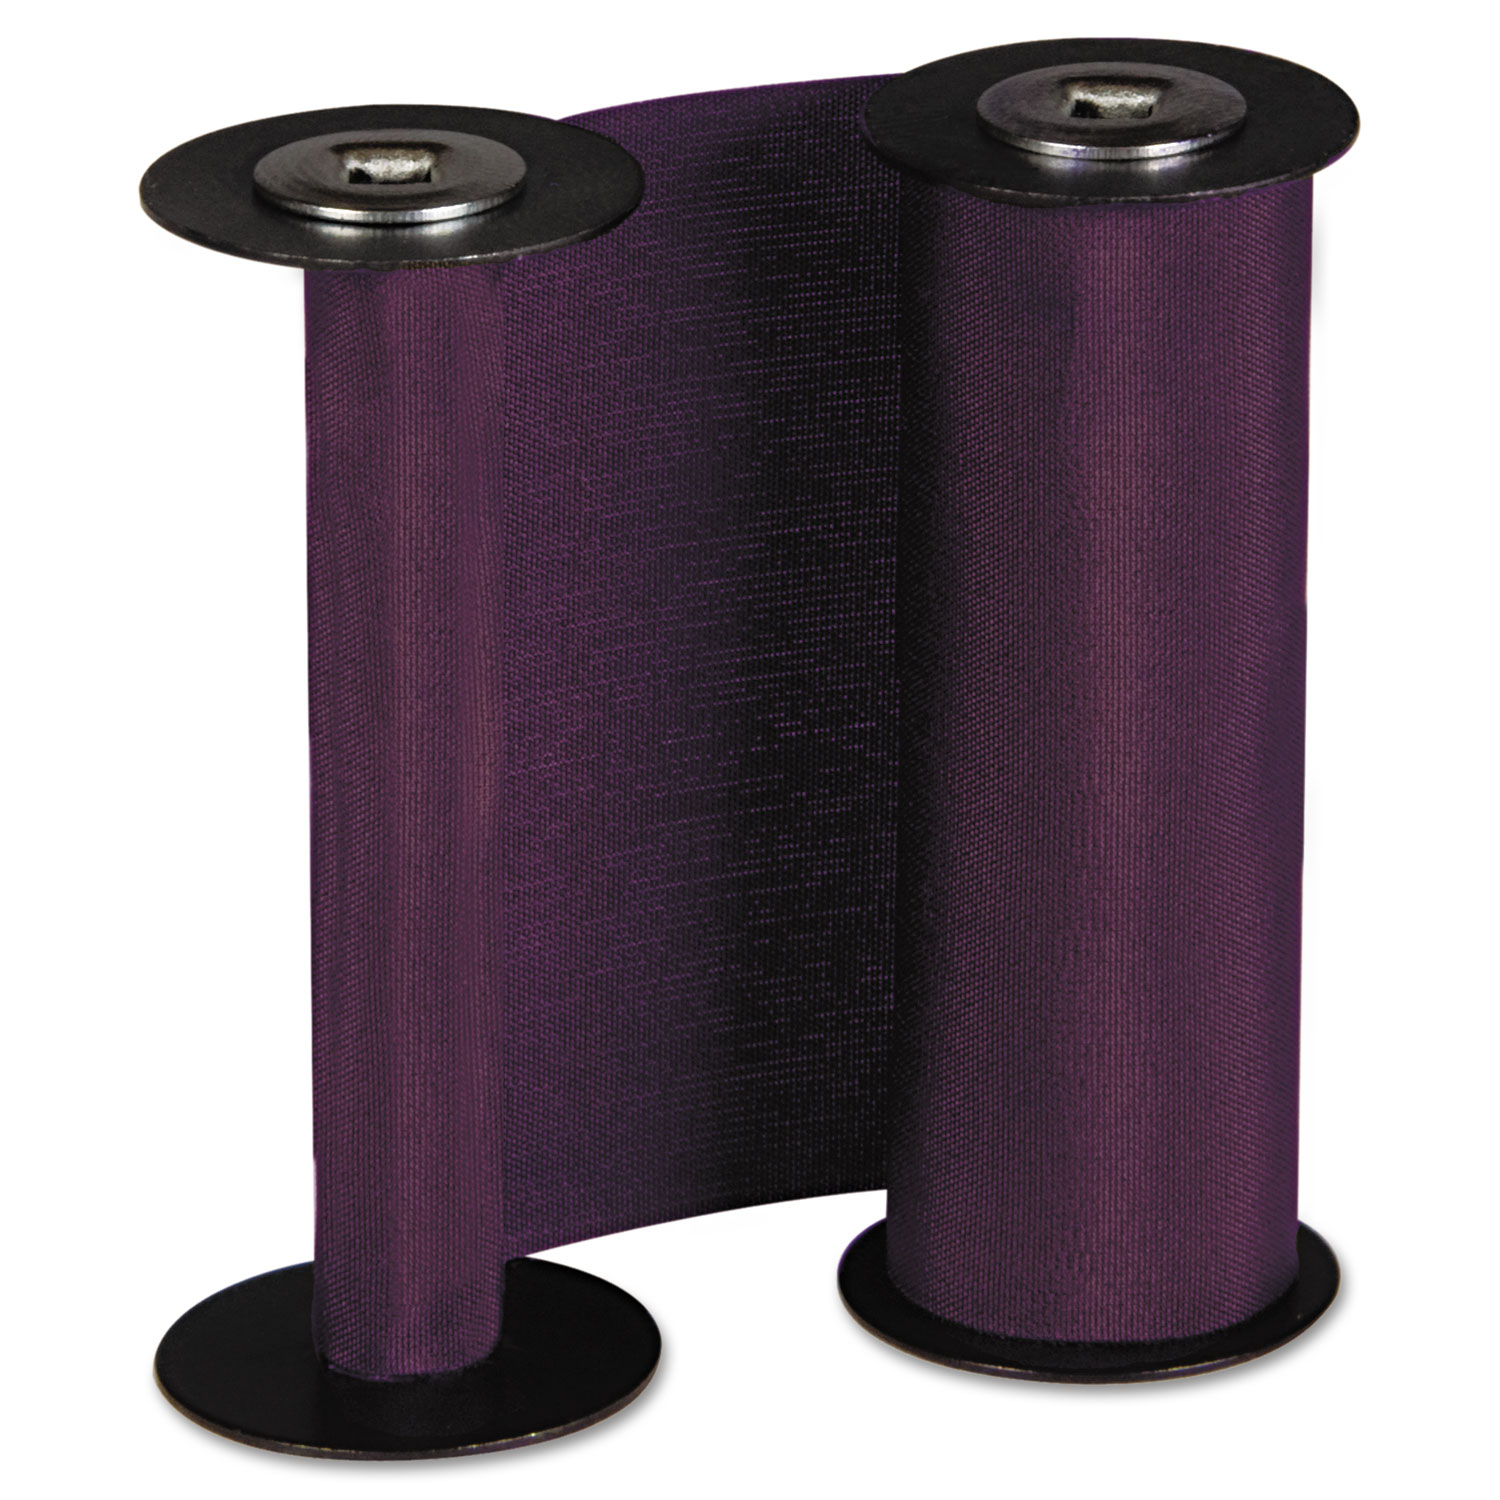  Acroprint 20-0137-000 200137000 Ribbon, Purple (ACP200137000) 